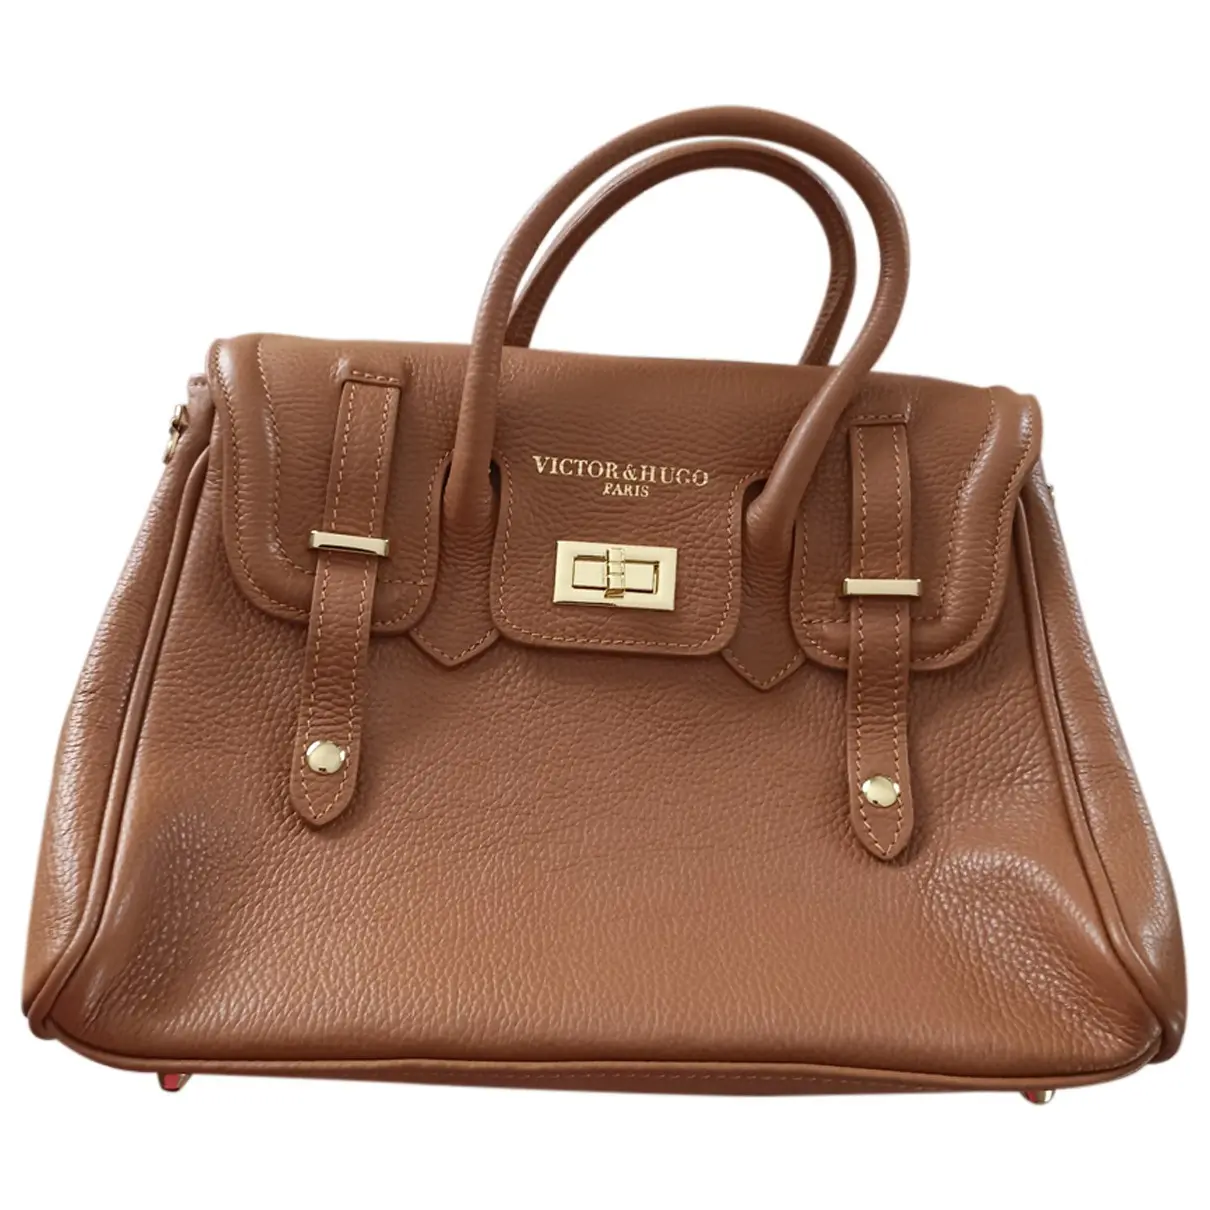 Leather handbag Victor & Hugo